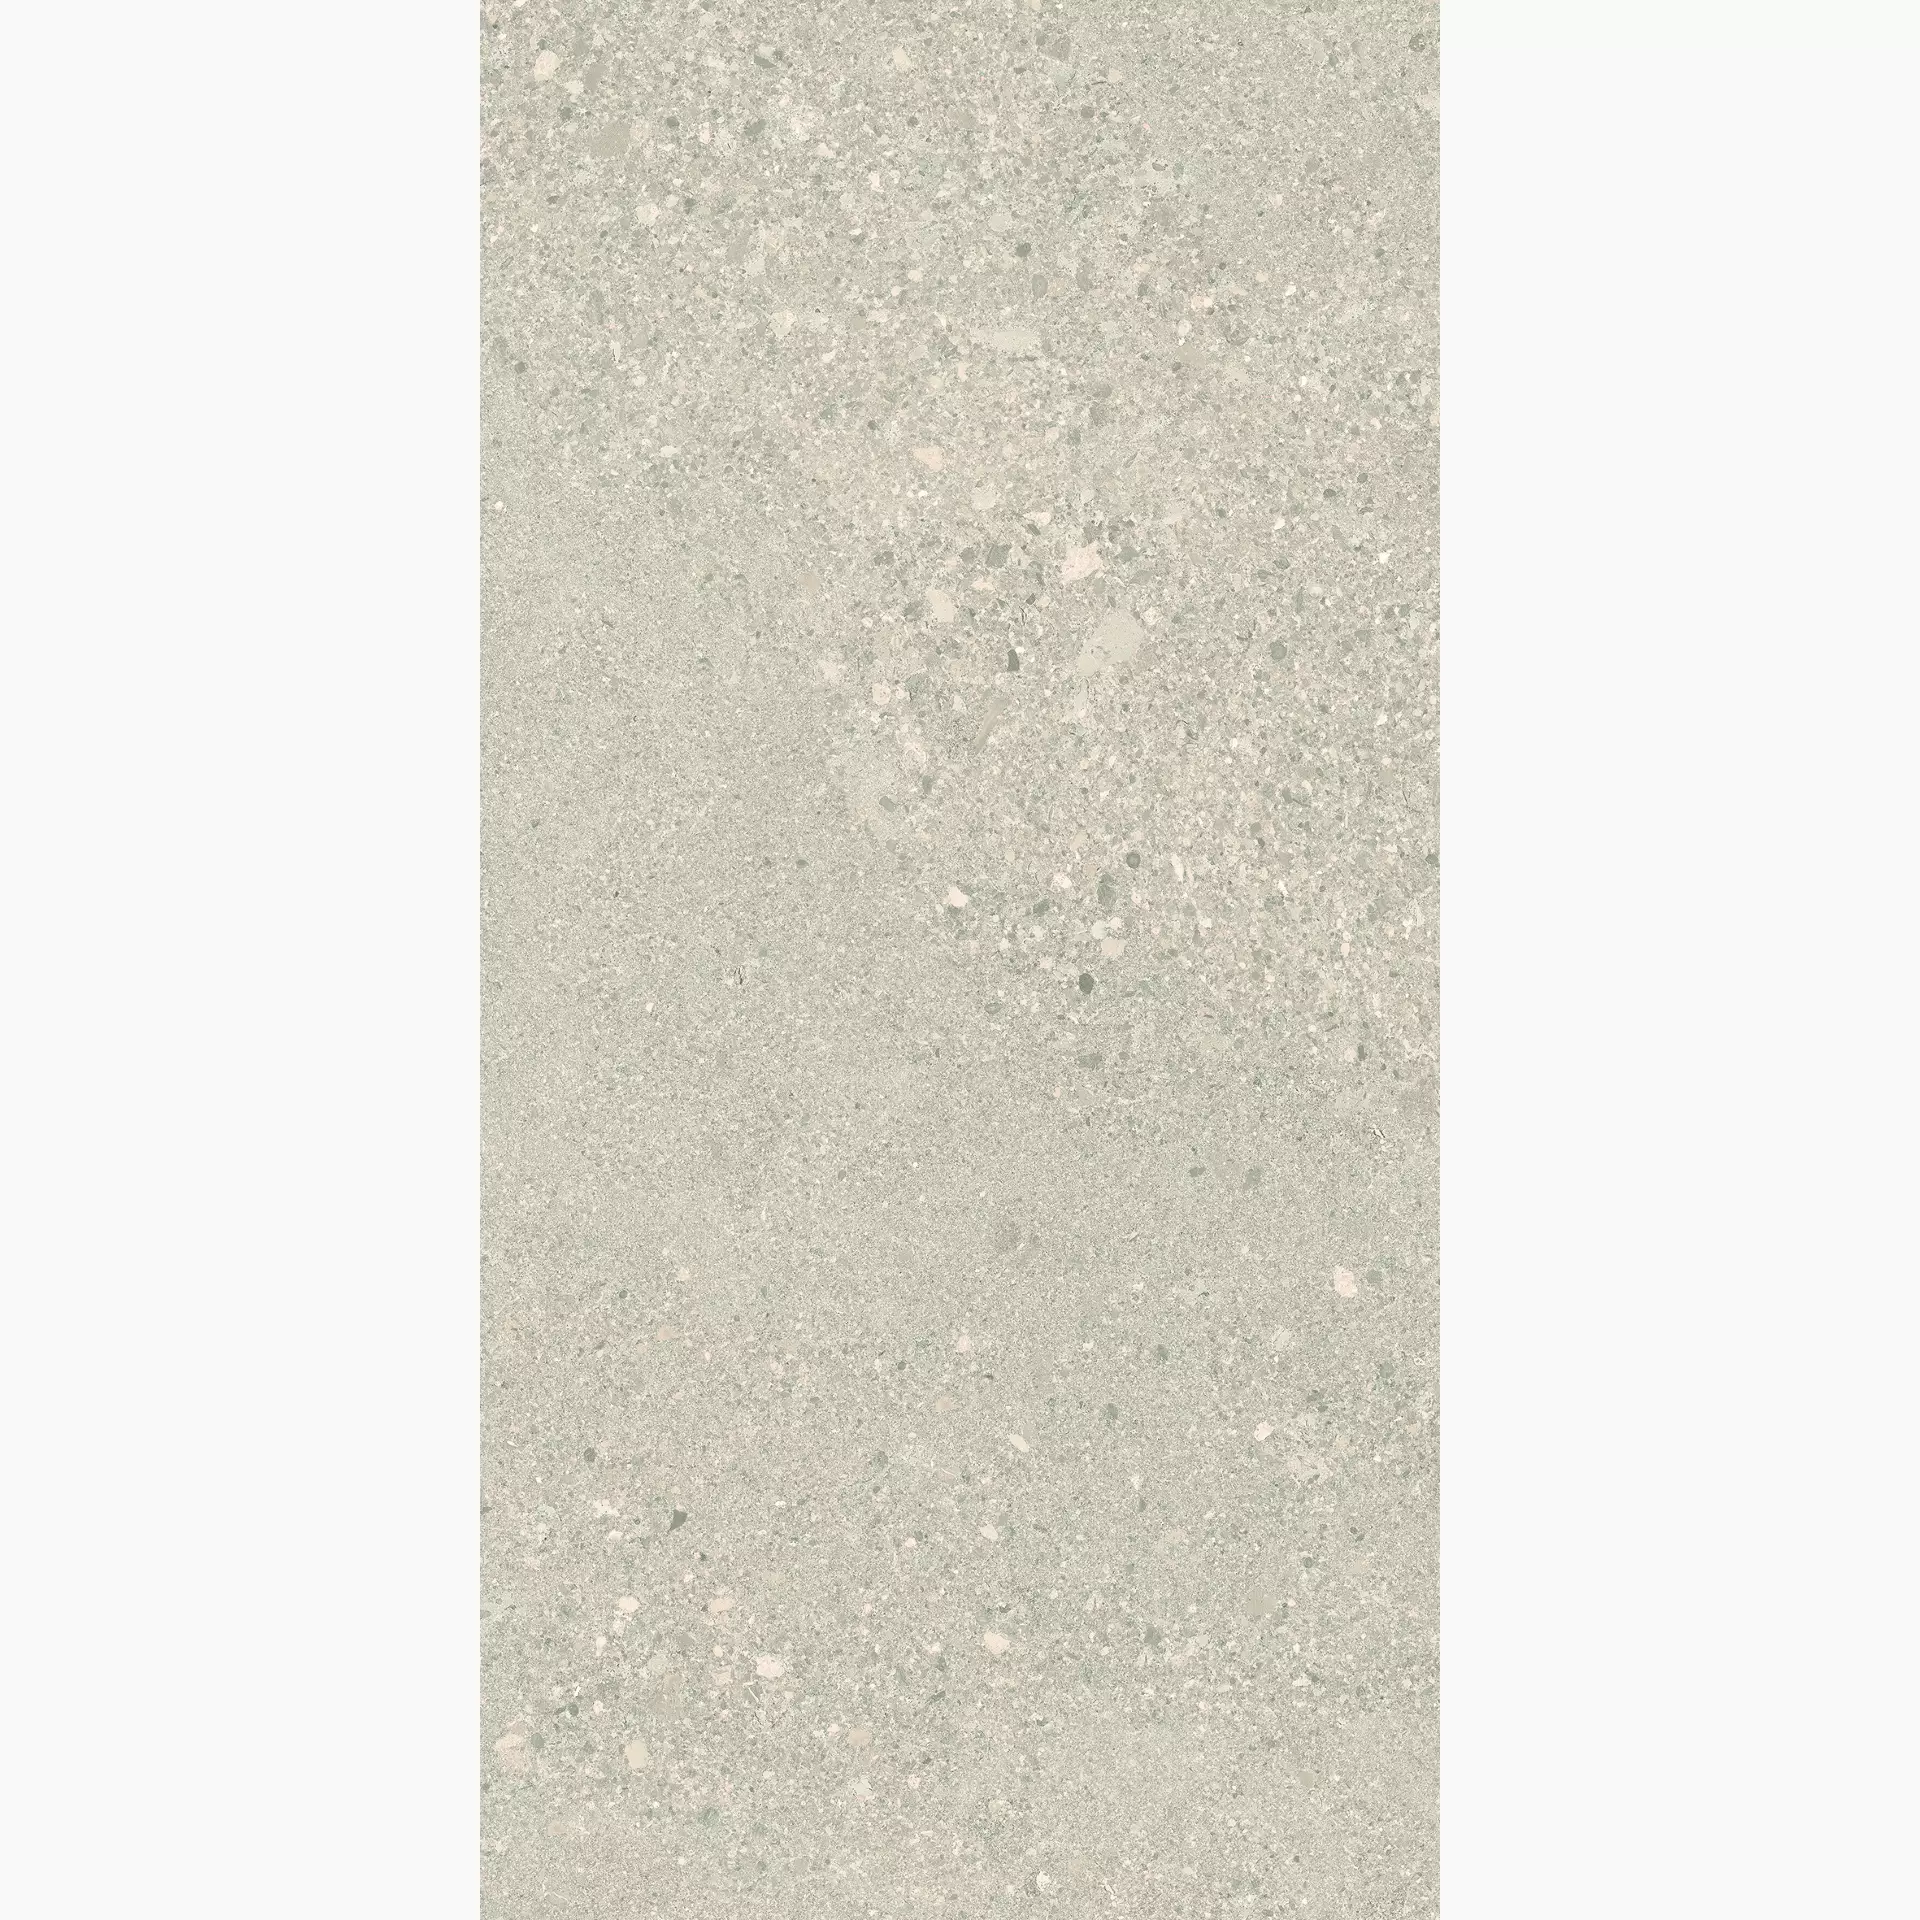 Ergon Grain Stone Rough Grain Sand Naturale E0AW 60x120cm rectified 9,5mm